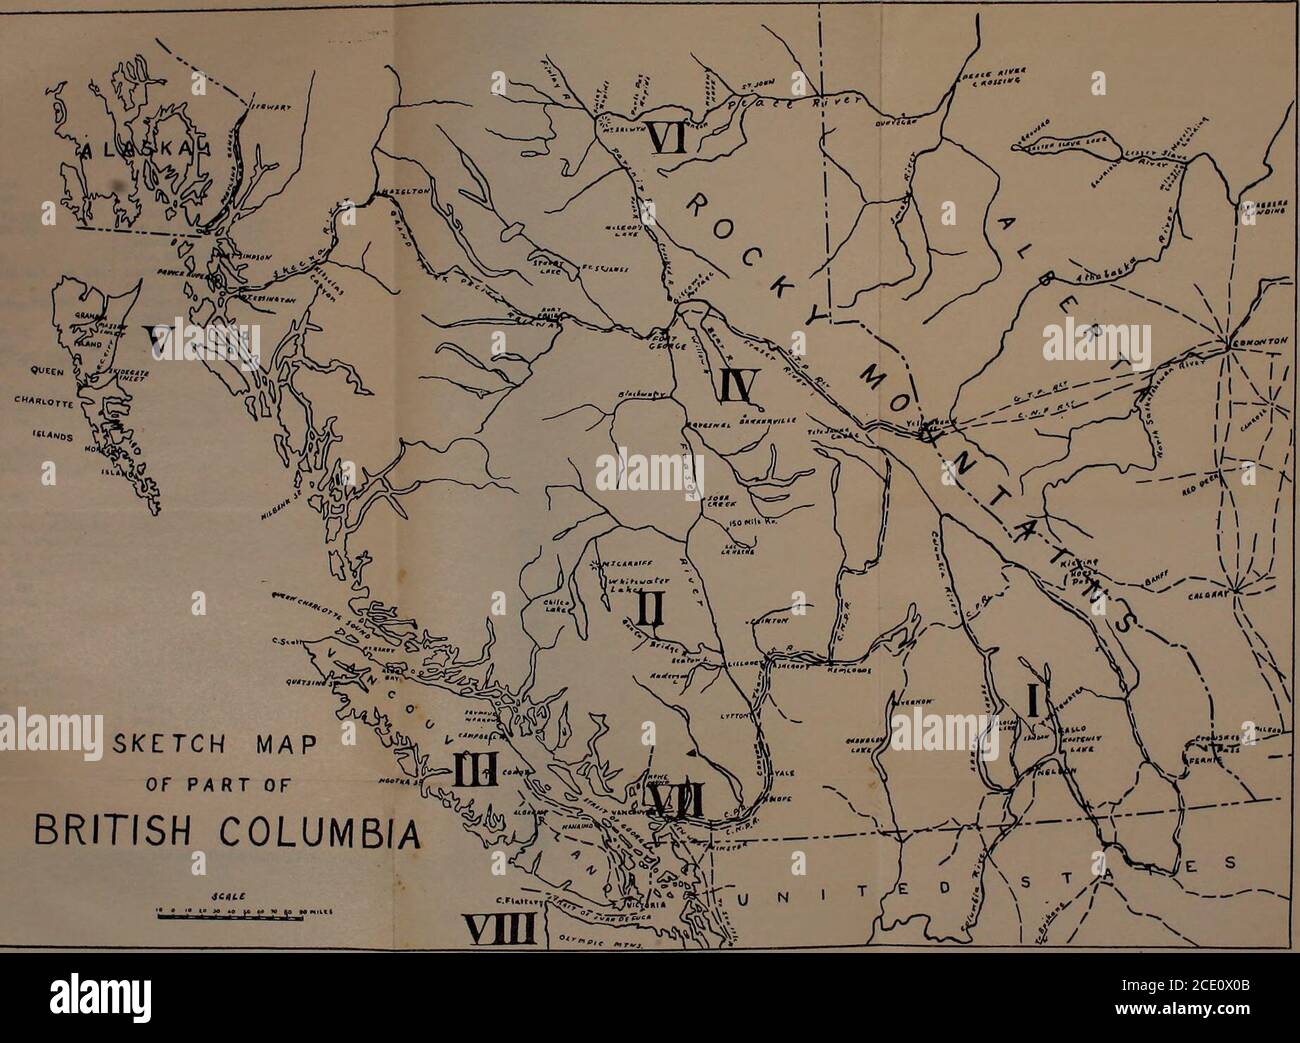 . The call of the West -letters from British Columbia . SKETCH MAP OF PART OF BRITISH COLUMBIA INDEX itia, BOS, Alba L10 Alert iAncoi:. 117. 152,l.vj.Athaba^ka Landing, BaUi 10 Bari] 19, M-.L2f «I ?51,1 . 11.. !.... I on, 266 (aril186 Cham, the, 118, I chik-otin [ndiaiChflootin ! l r.&lt; Chilko Lake, IChin./ Chinese, 256, 257, 258. I 270n, 48, 115, 117 . 315B08, BIO&lt; rnua 121, 124, L87 Coug. 114, 219 6, 176DnnoMM, 90 l»unv B ilw.iv,21, ?A 204, 210, 21 i 204, 909 . 11D. 171 MB 326 INDEX Forest fires, 45,149, 180 Fort Fraser, 156 Fort George, 50, 53, 112, 116, 119, 122, 123, 130, 142, 150, 1 Stock Photo